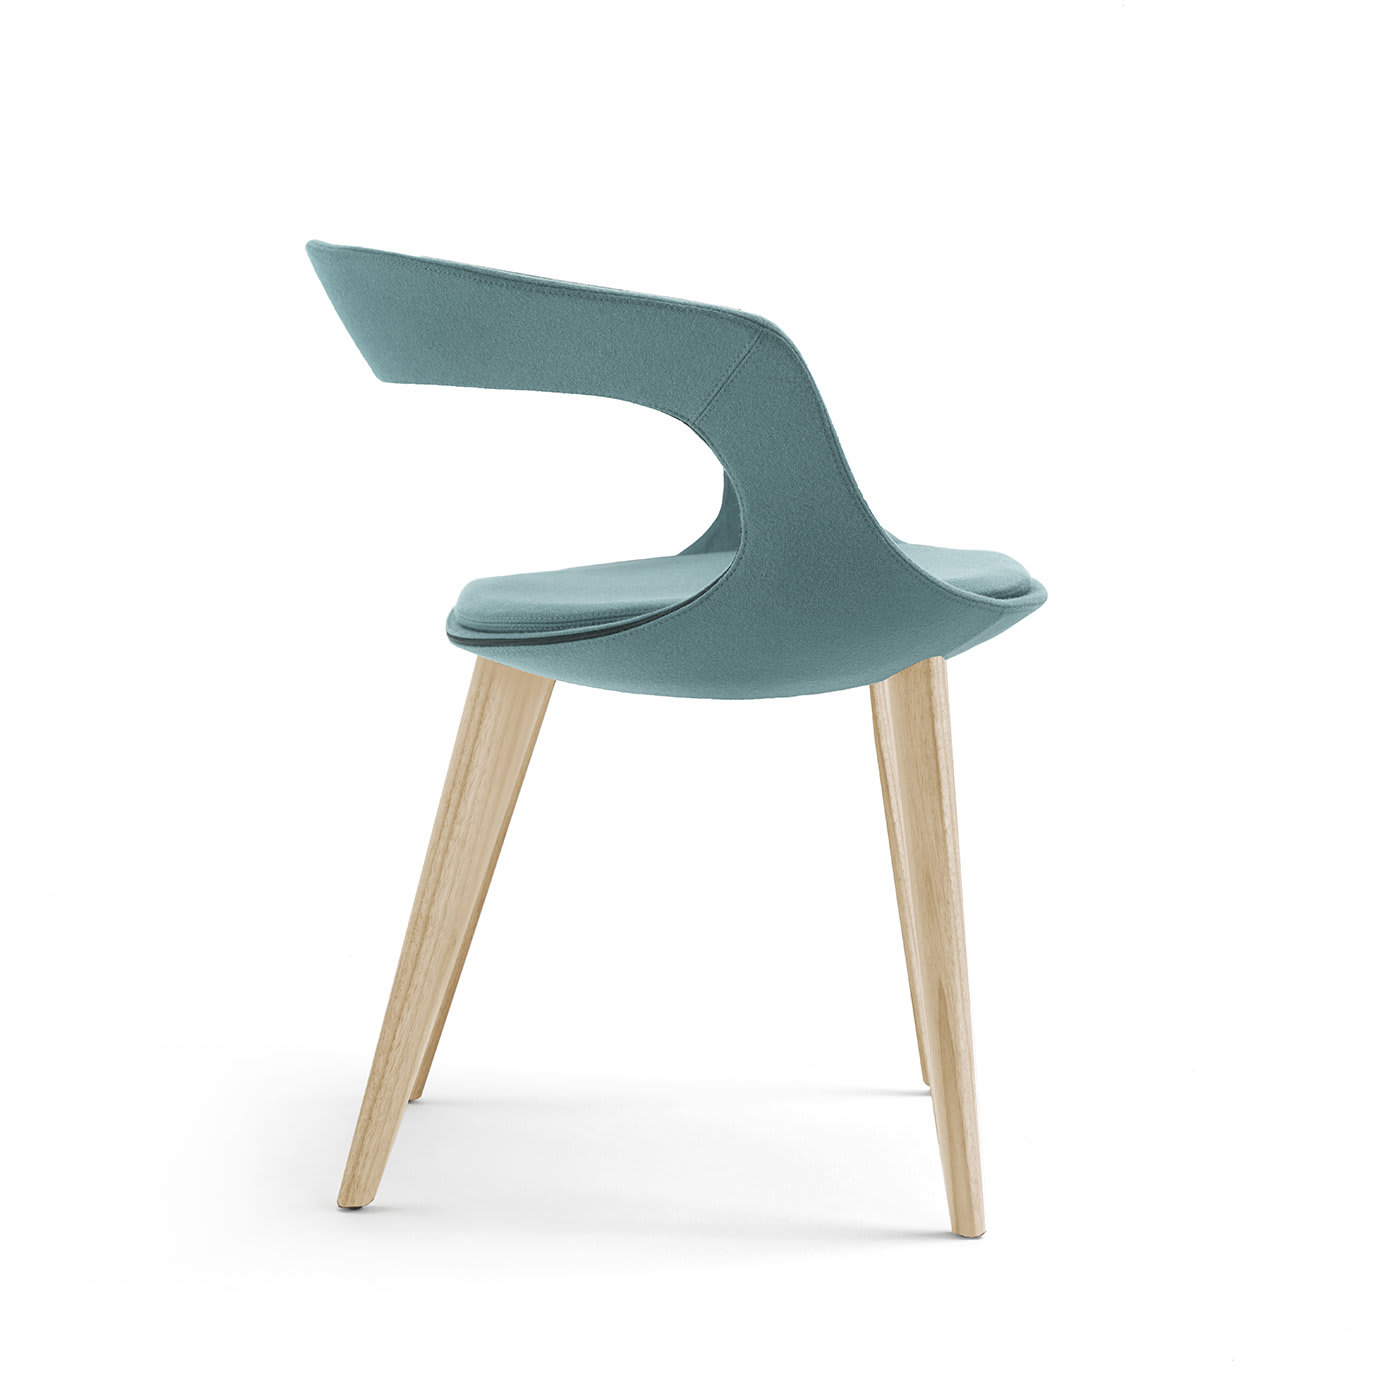 Frenchkiss Low-Backed Wooden-Legged Chair by Stefano Bigi - Enrico Pellizzoni